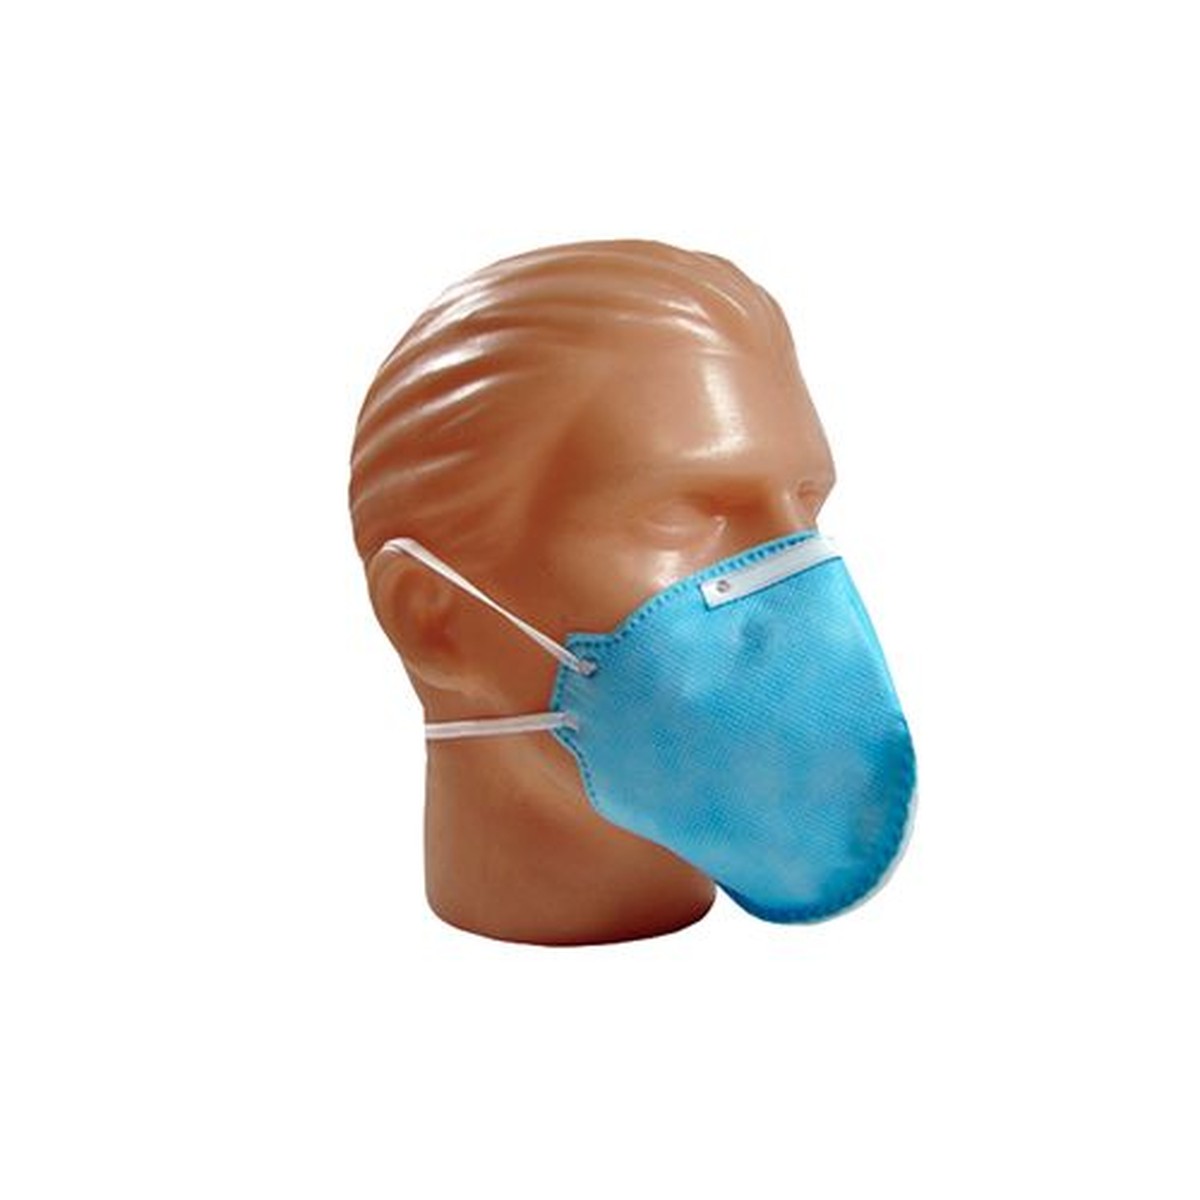 Foto do produto Máscara de proteção N95 PFF2 para Coronavirus Unidade – Descarpack